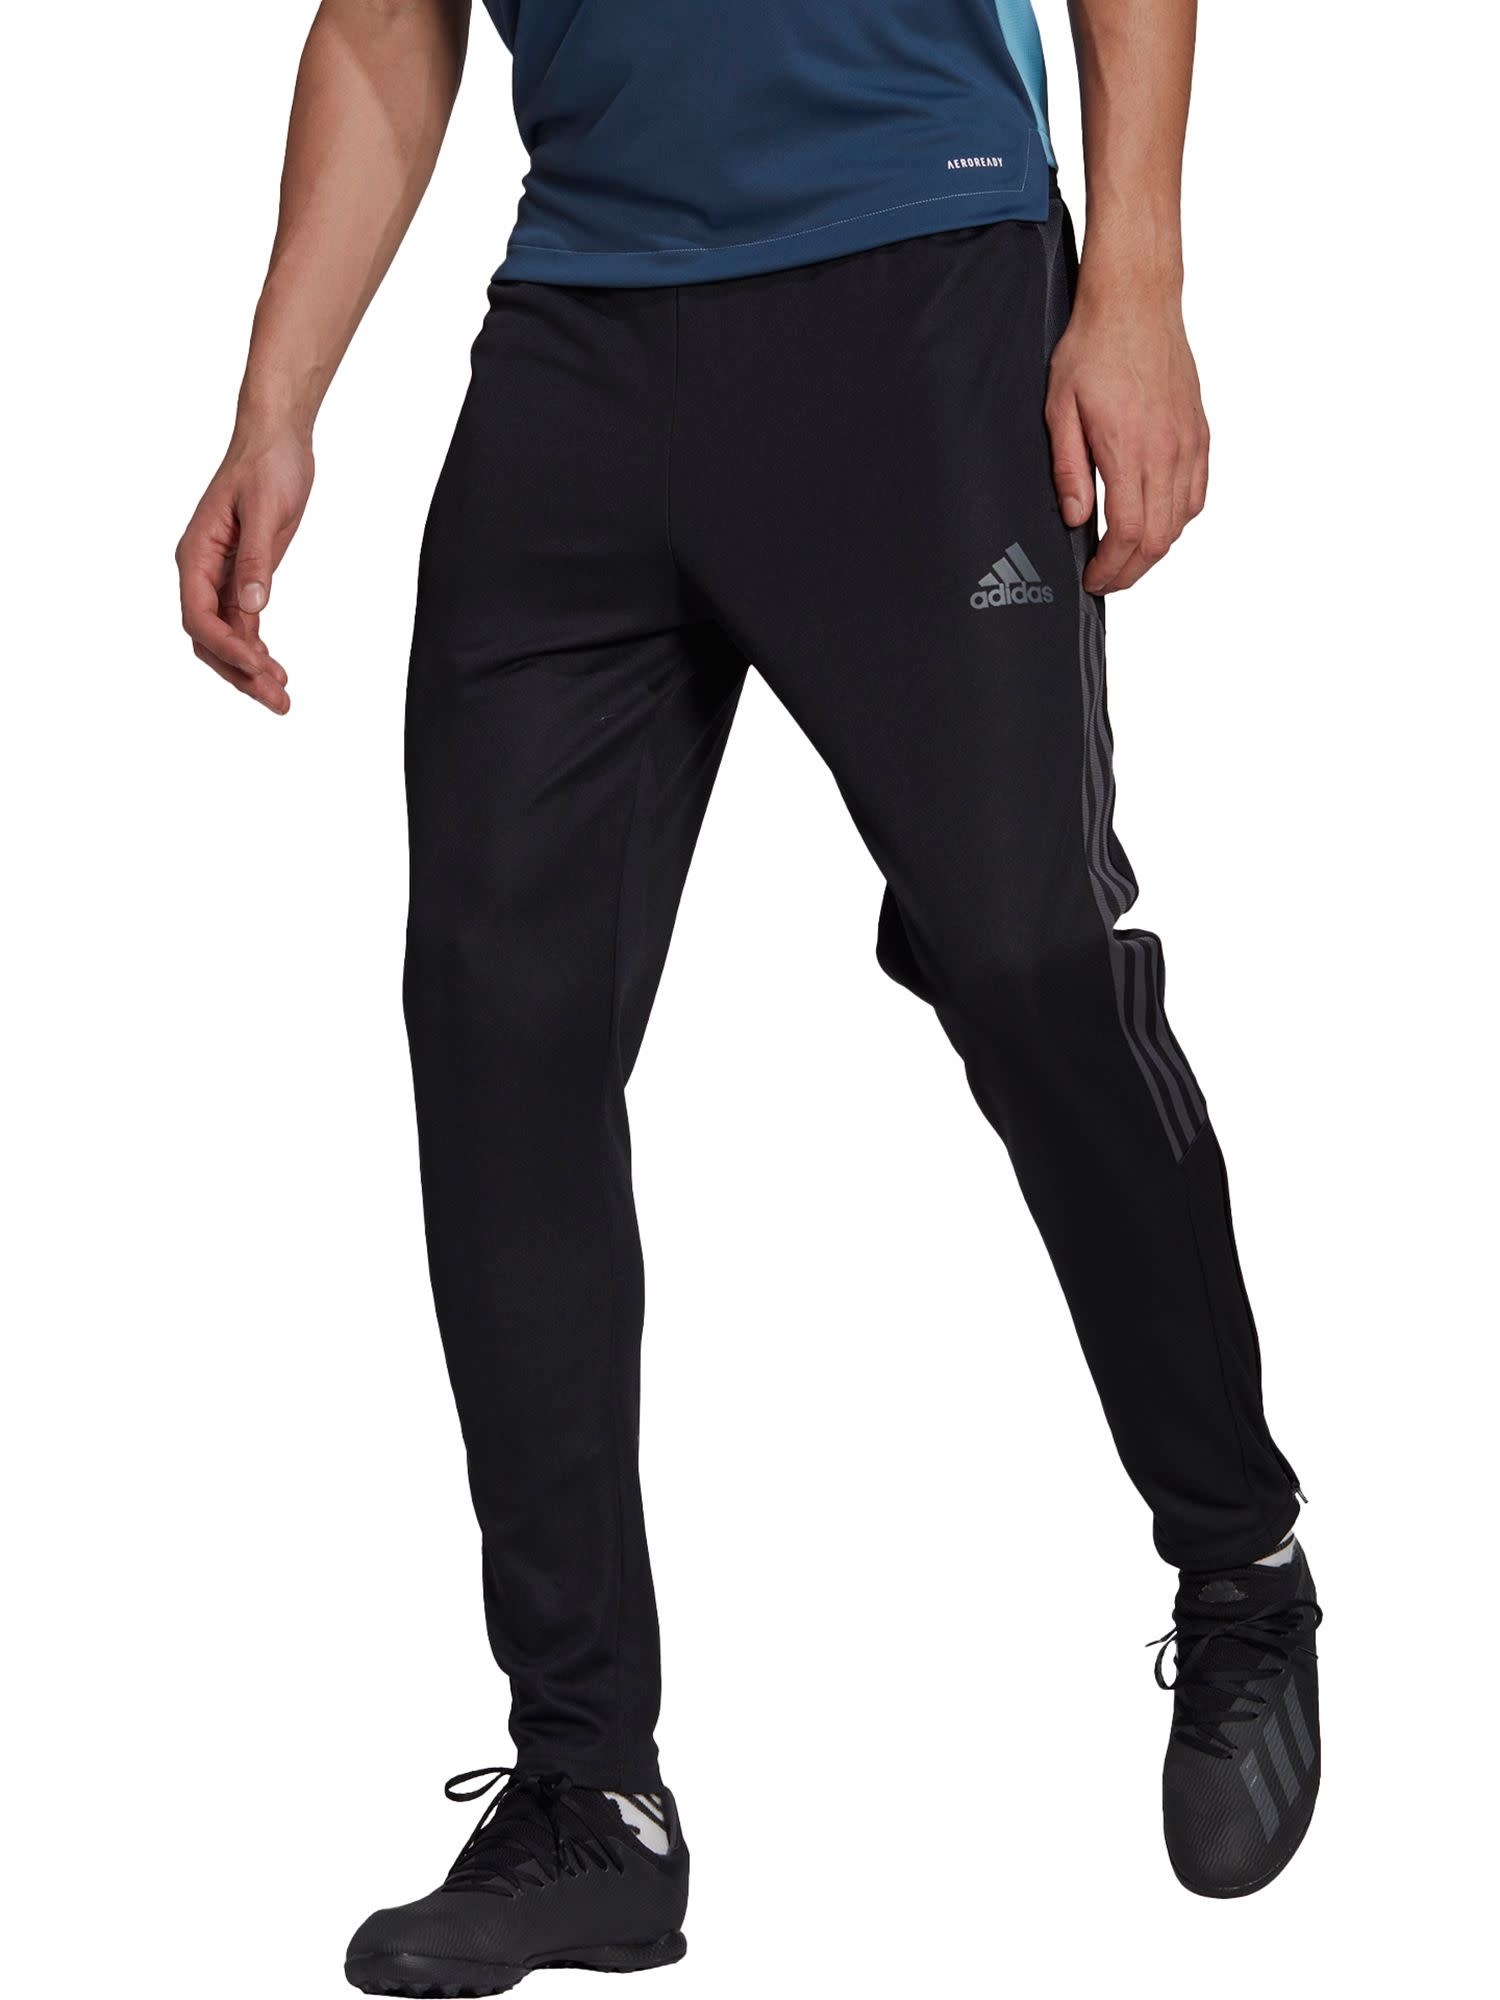 adidas adidas Tiro Performance Training Pants - Black/Grey - Soccerium